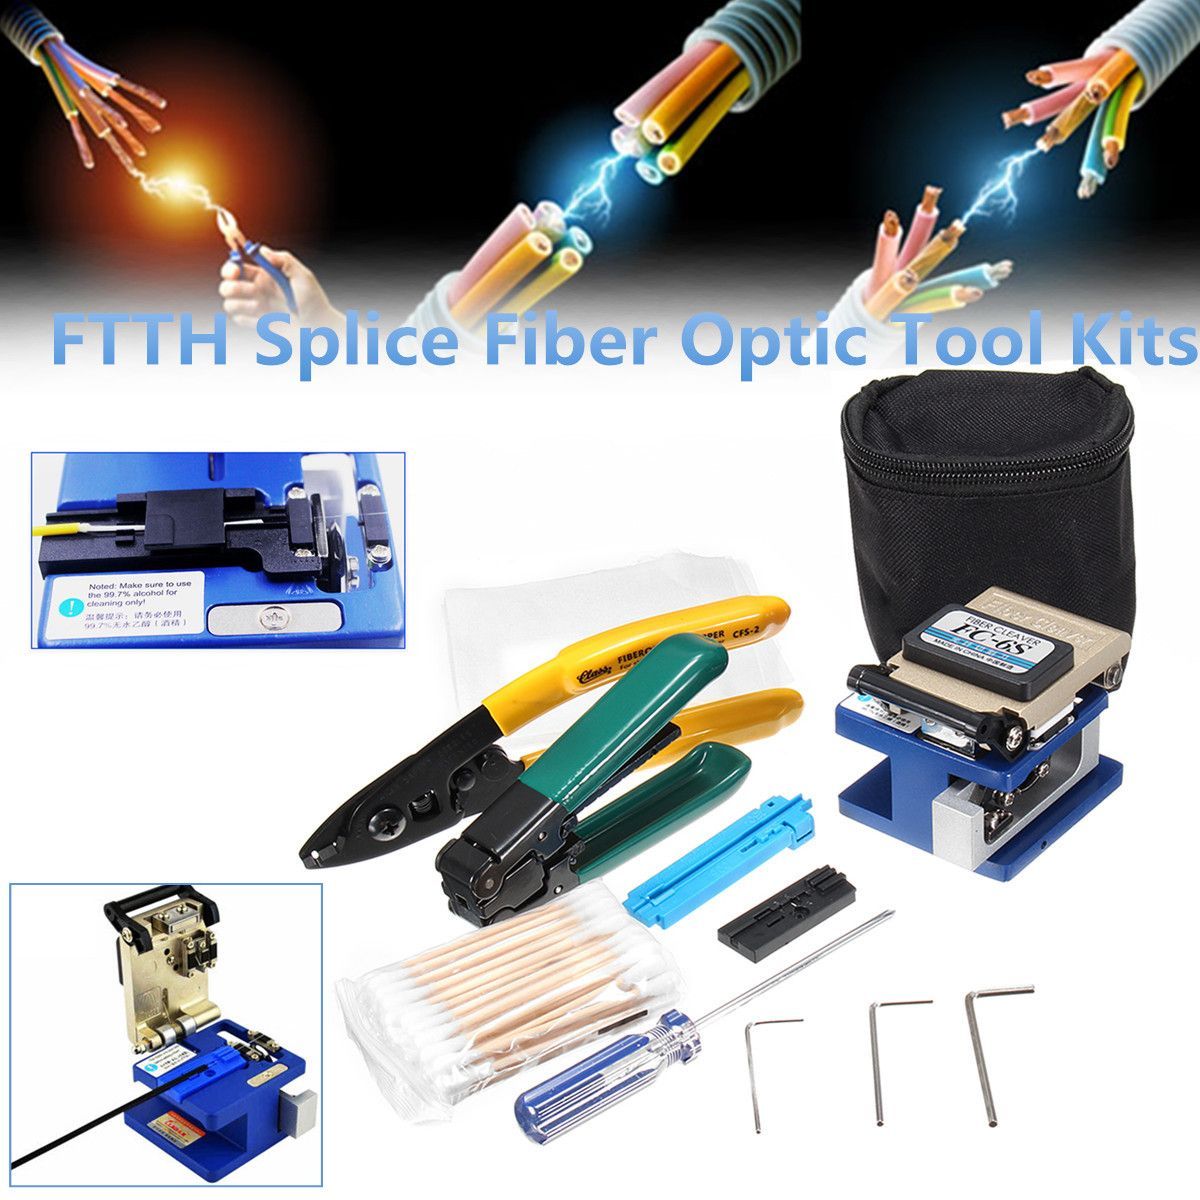 FTTH-Splicing-Splice-Fiber-Optic-Stripping-Tool-Kits-With-Fiber-Cleaver-FC-6S-1193343